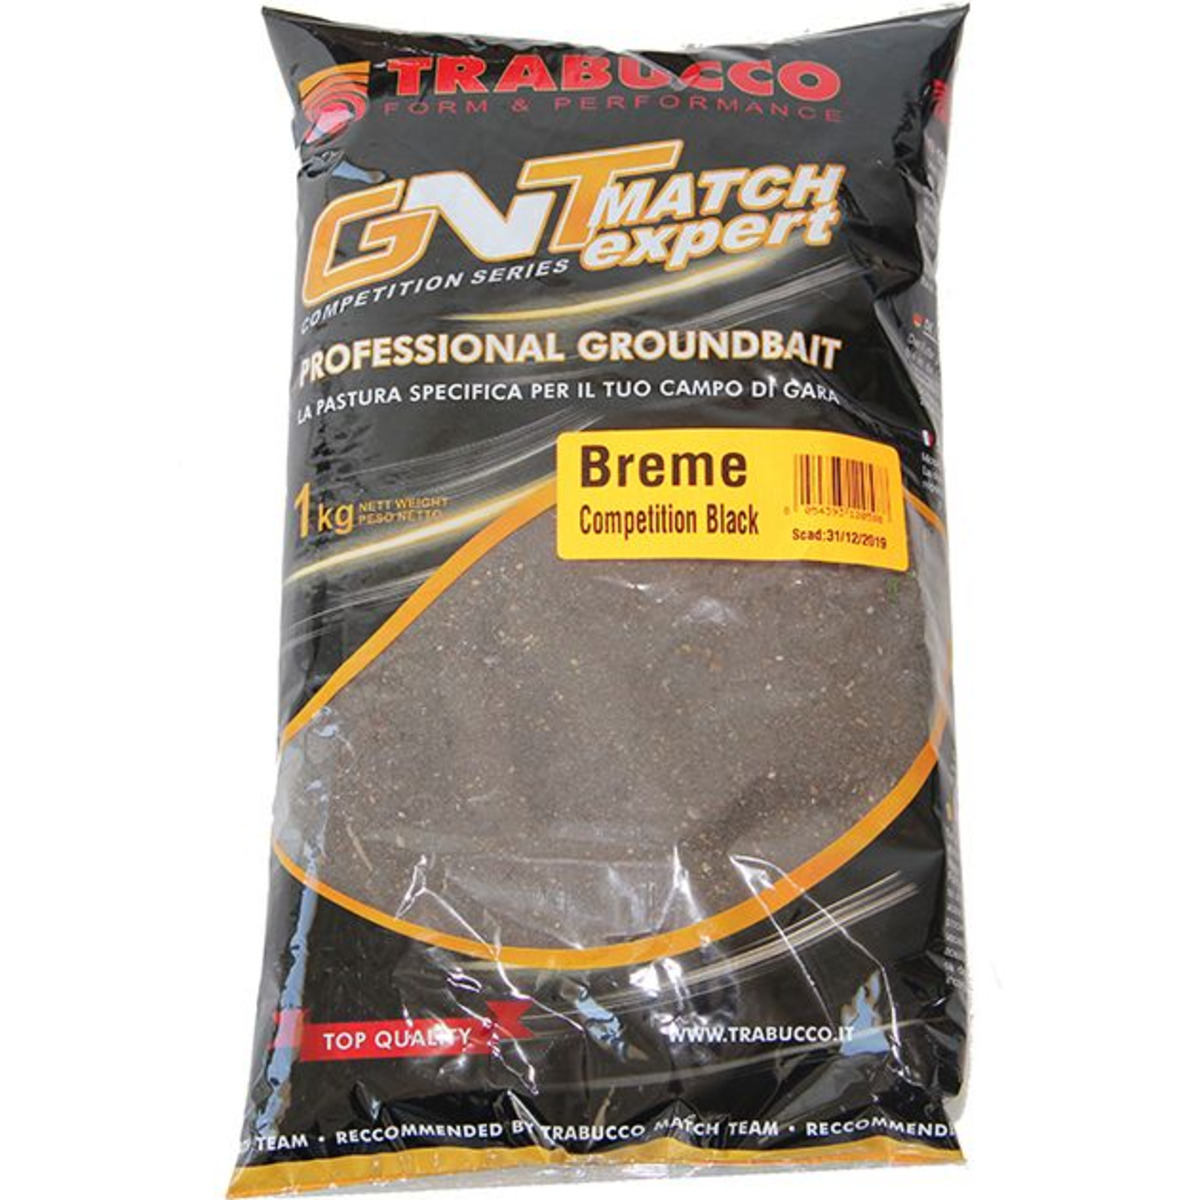 Trabucco GNT Match Expert Breme Competition - Breme Competition Black - 1 kg